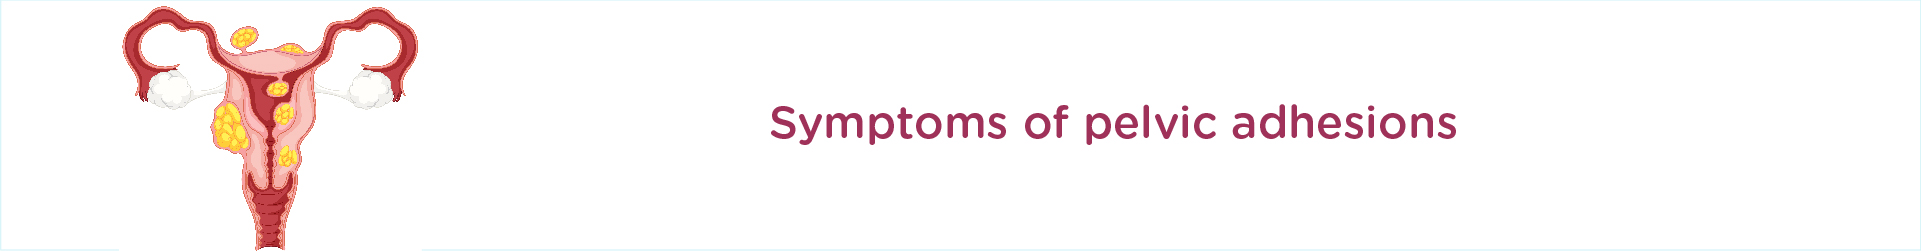 Symptoms of Pelvic Adhesions